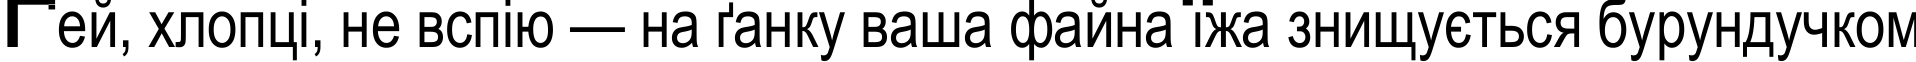 Пример написания шрифтом Julia Special Font W текста на украинском